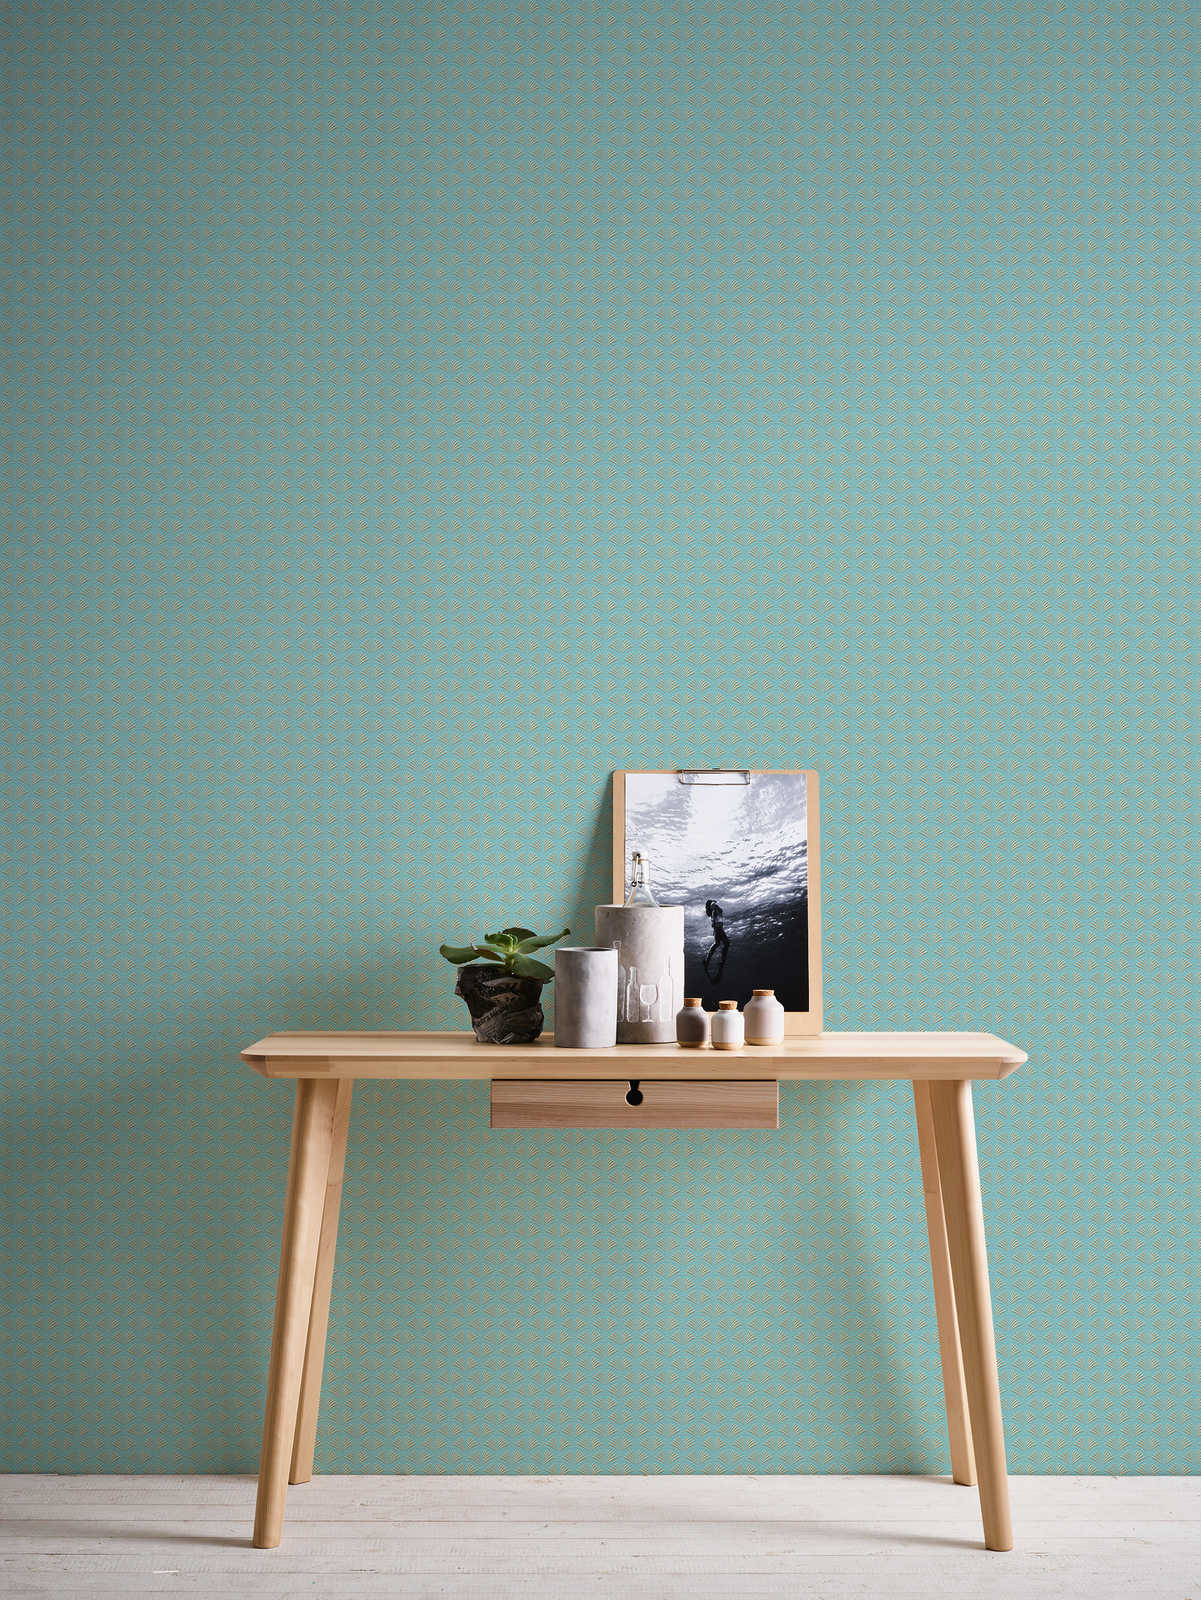             Non-woven wallpaper turquoise & gold design, elegant metallic gloss effect
        